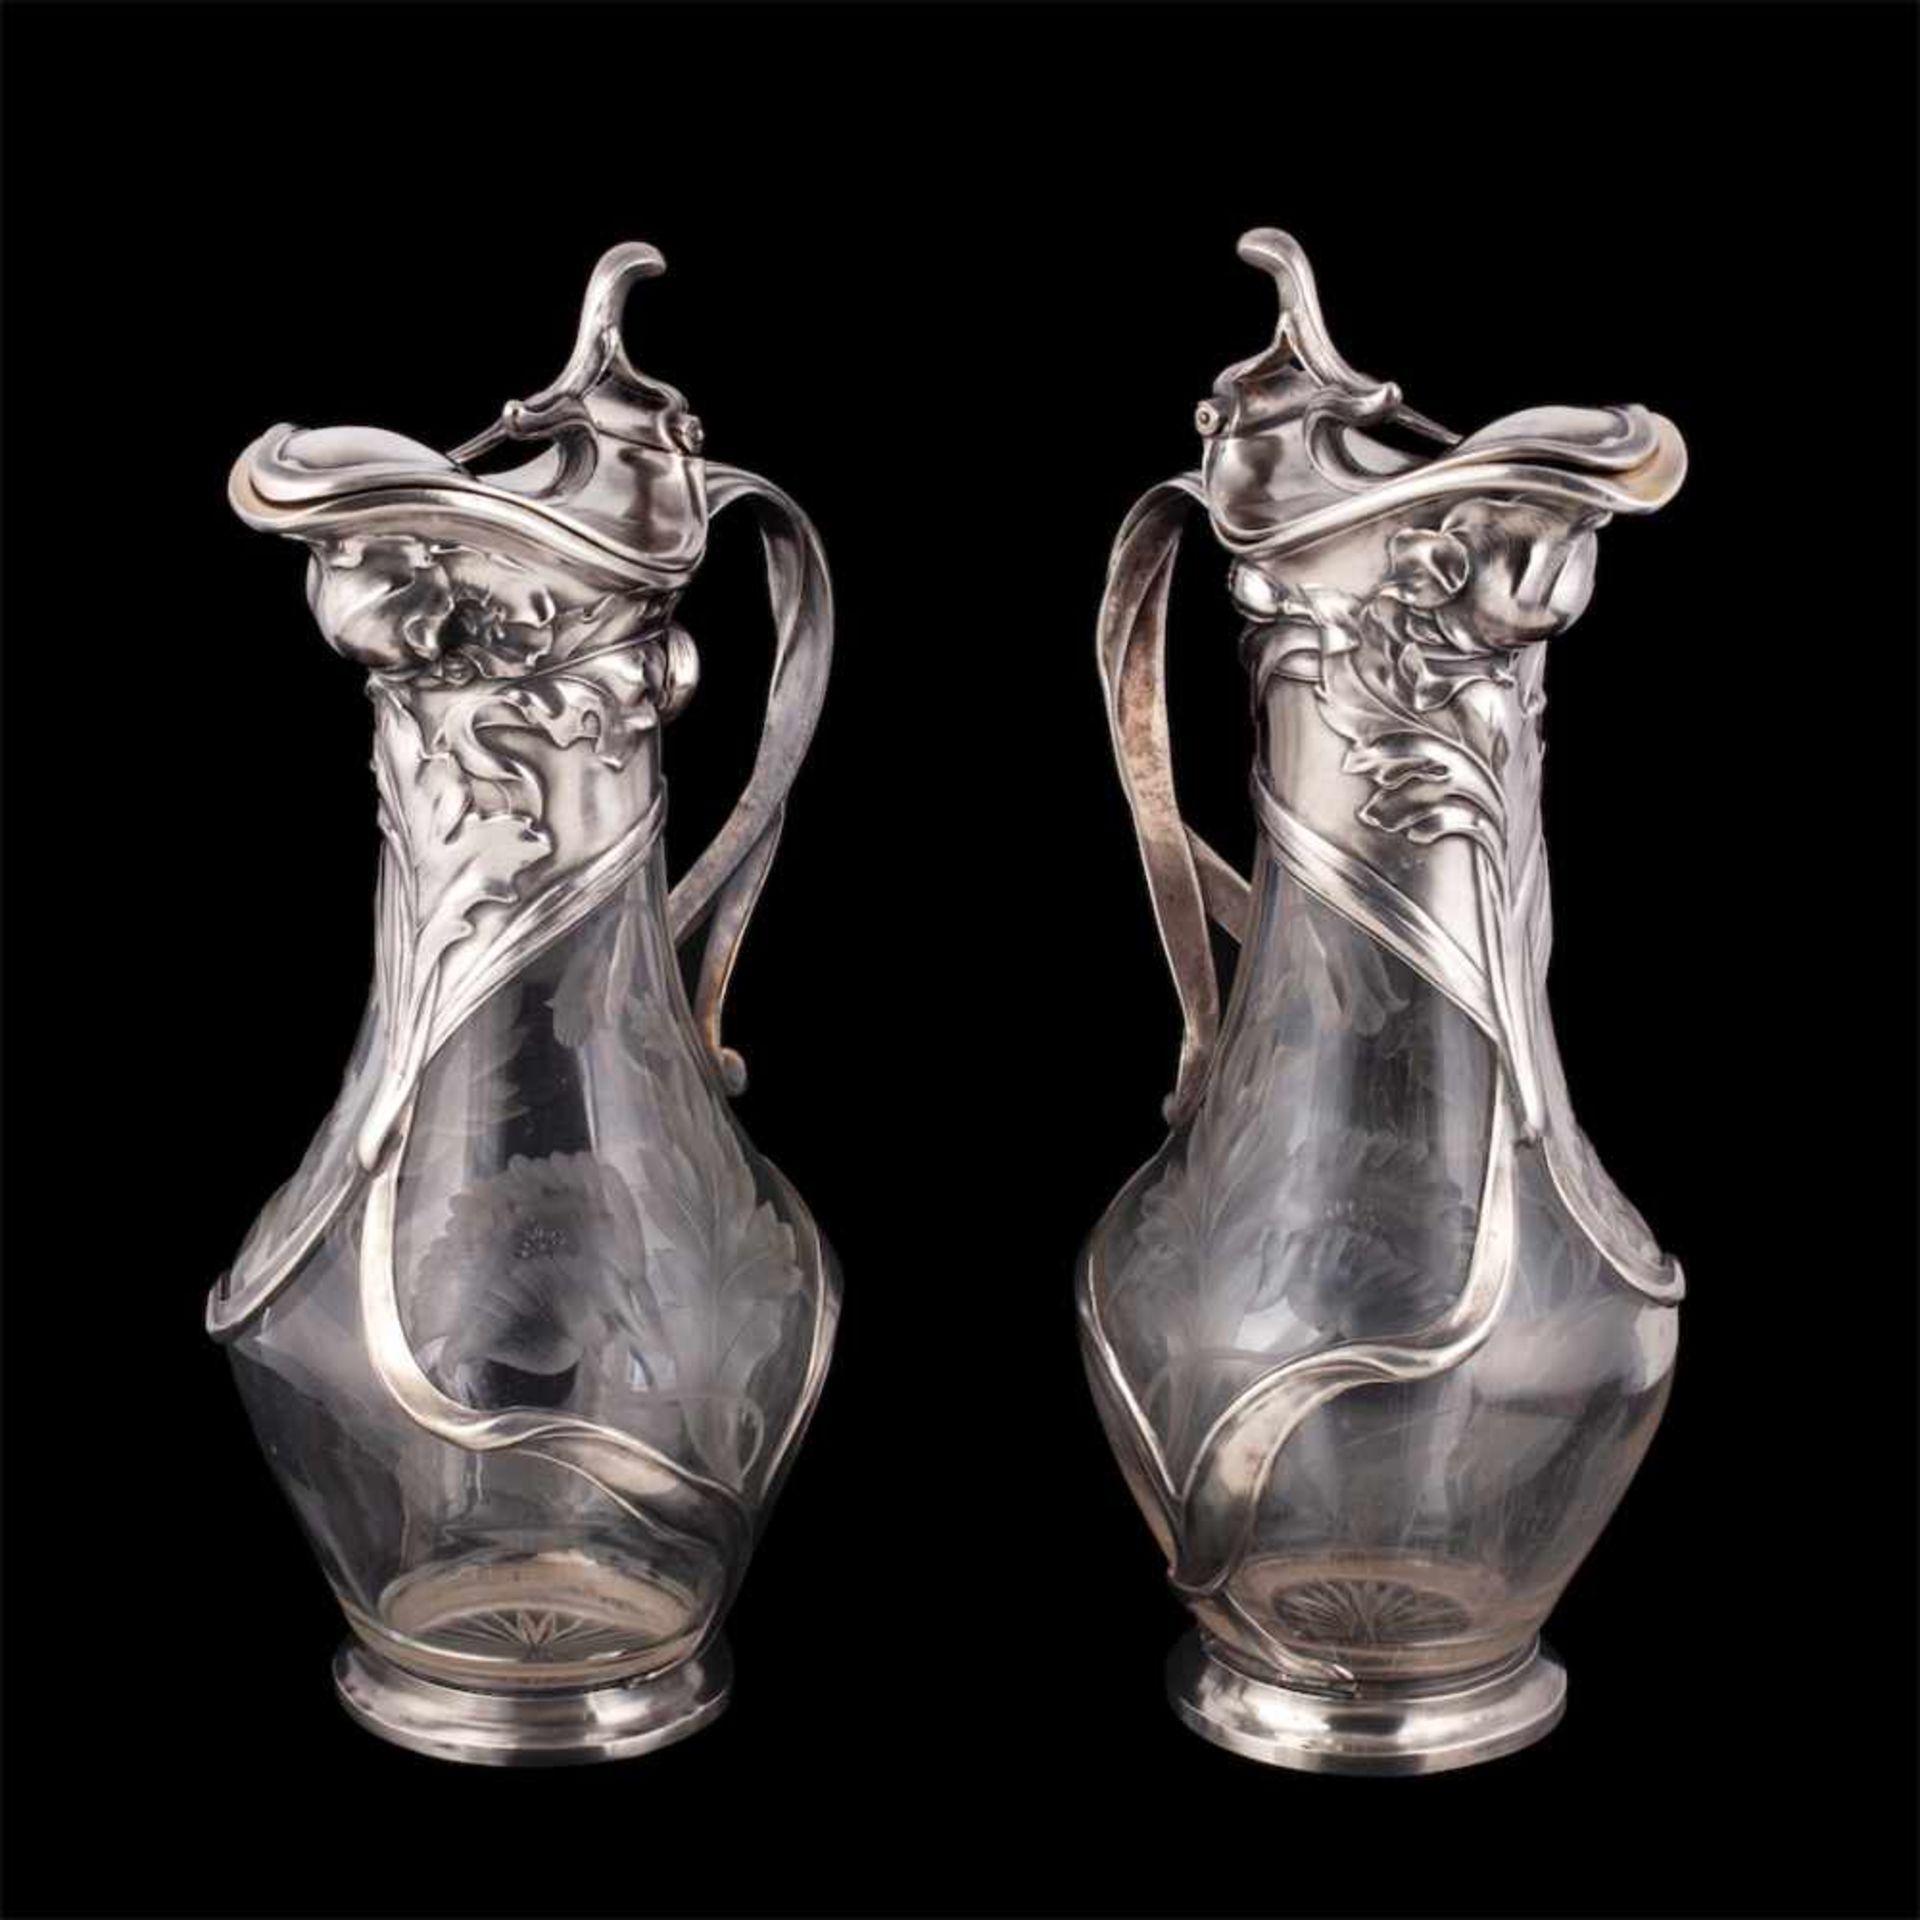 A pair of elegant Russian Art Nouveau decanters